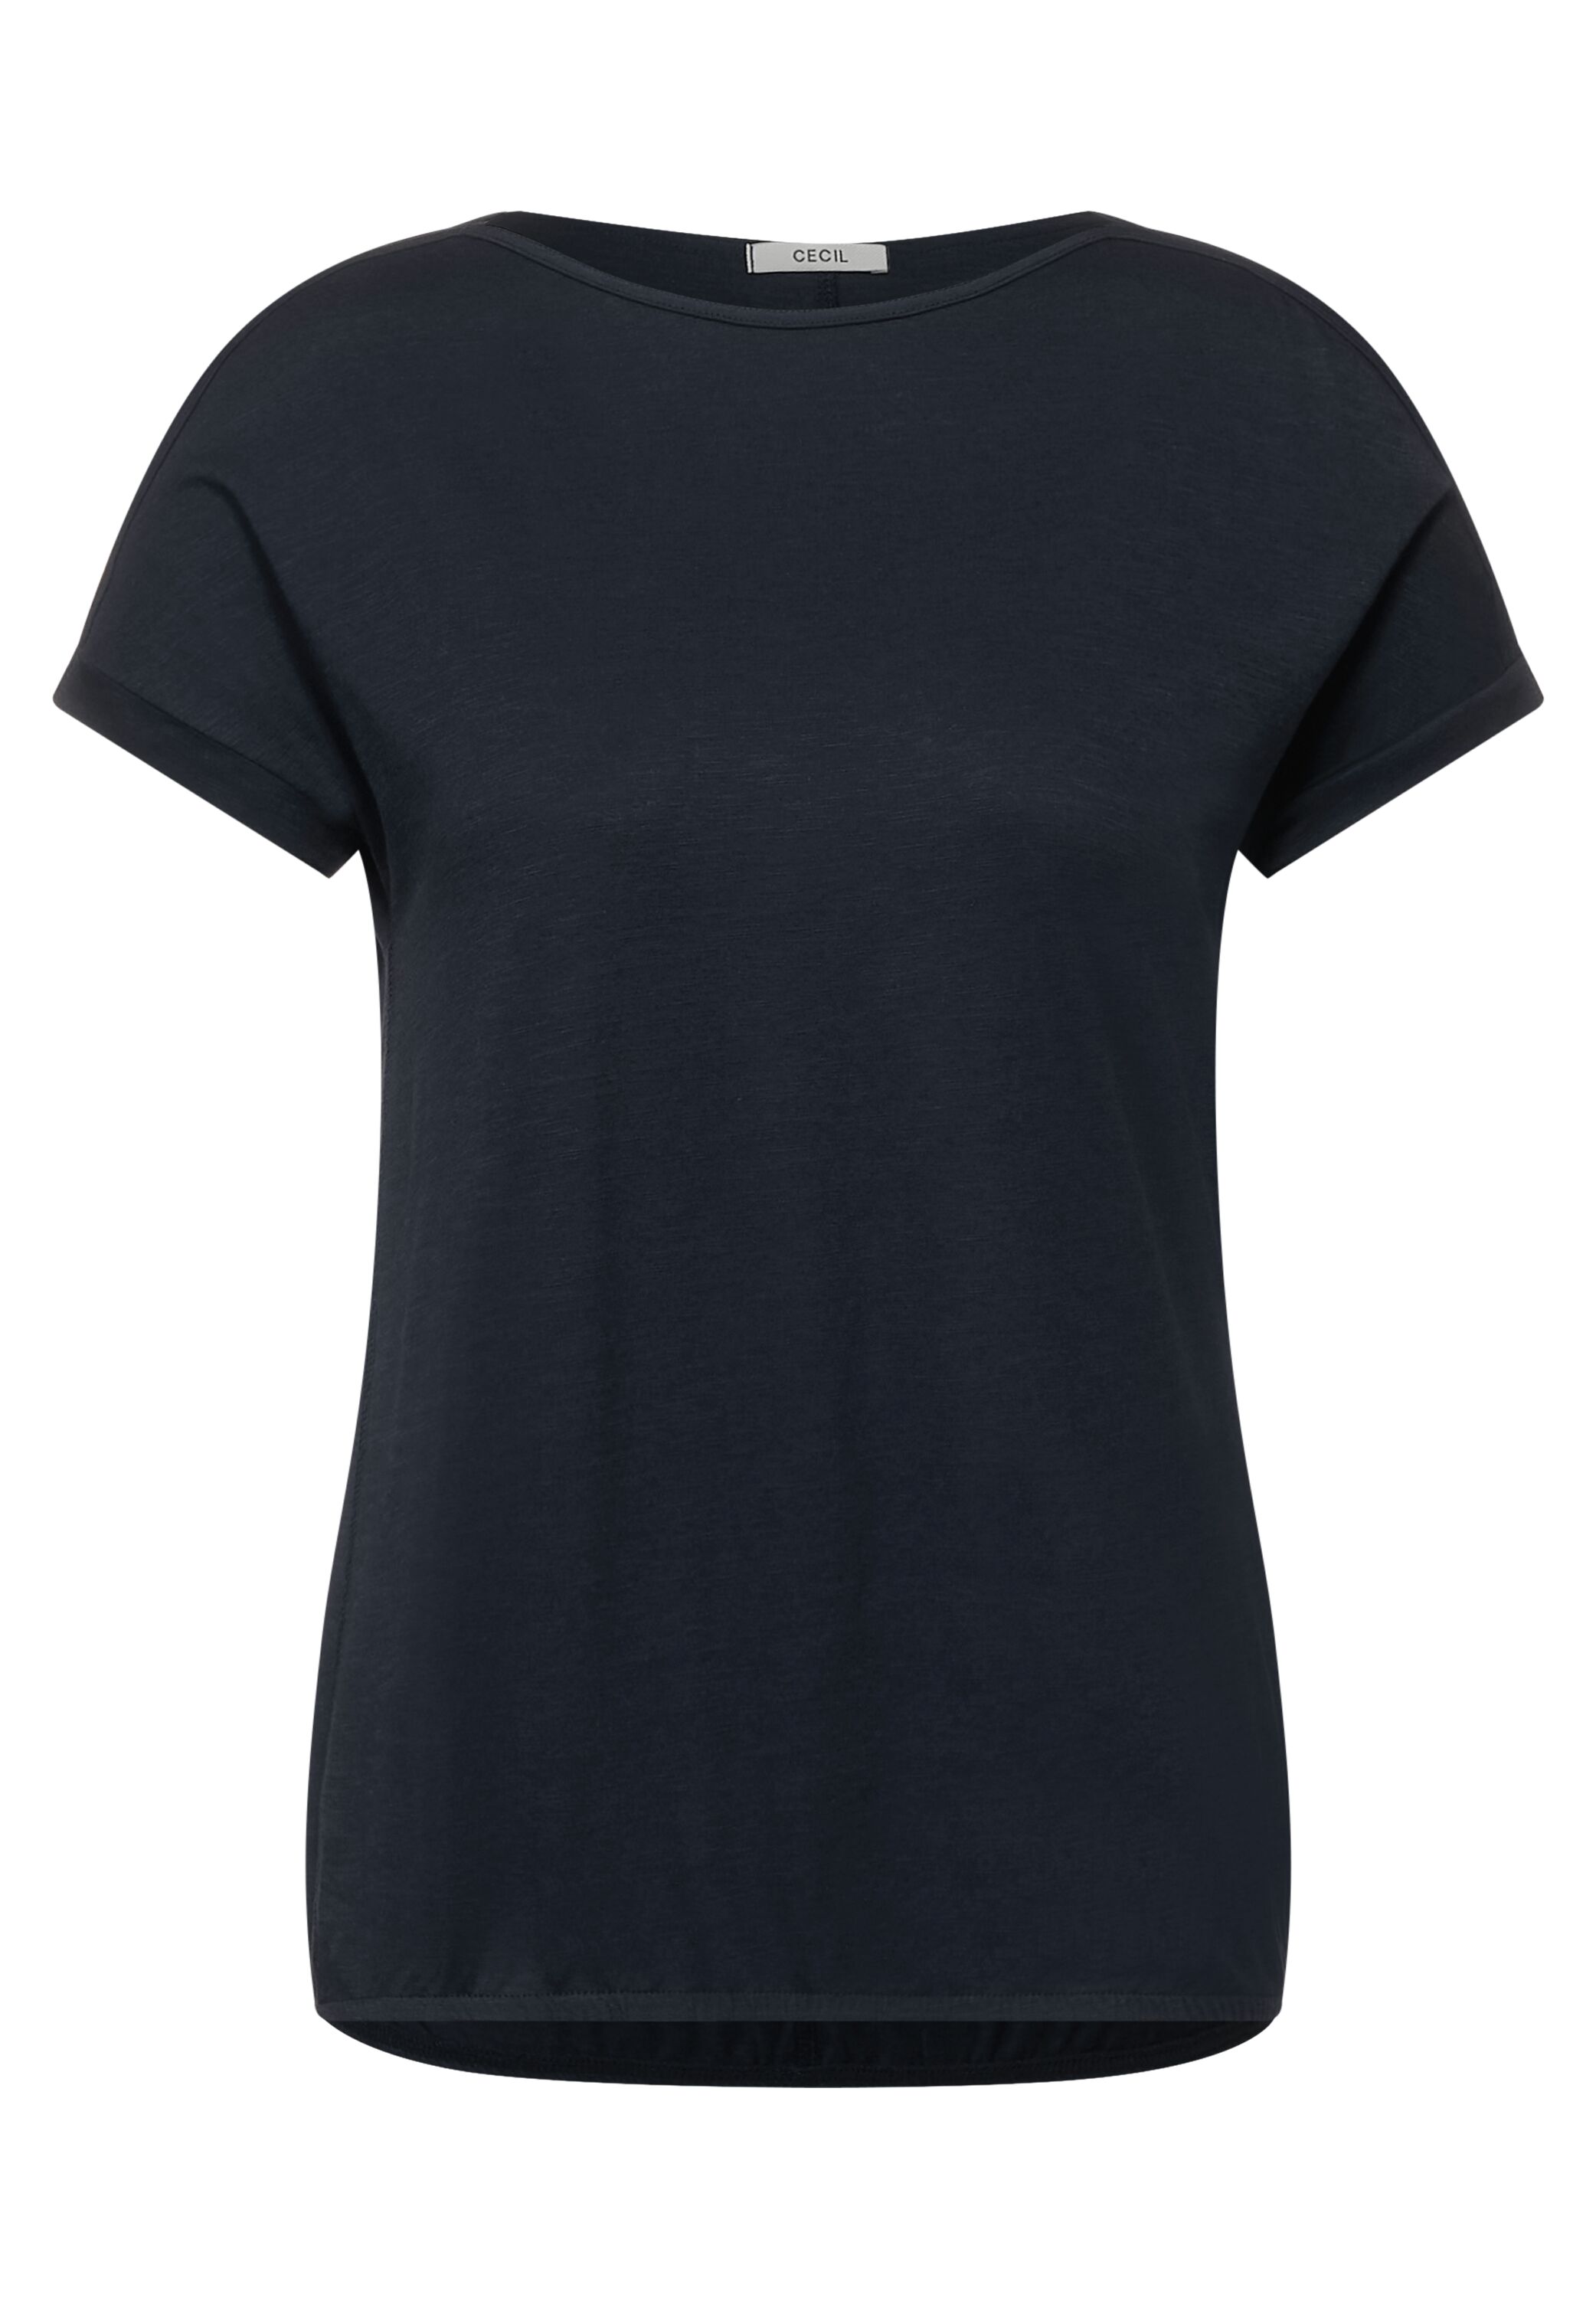 CECIL T-Shirt in Deep Blue im SALE reduziert B316344-10128 - CONCEPT Mode